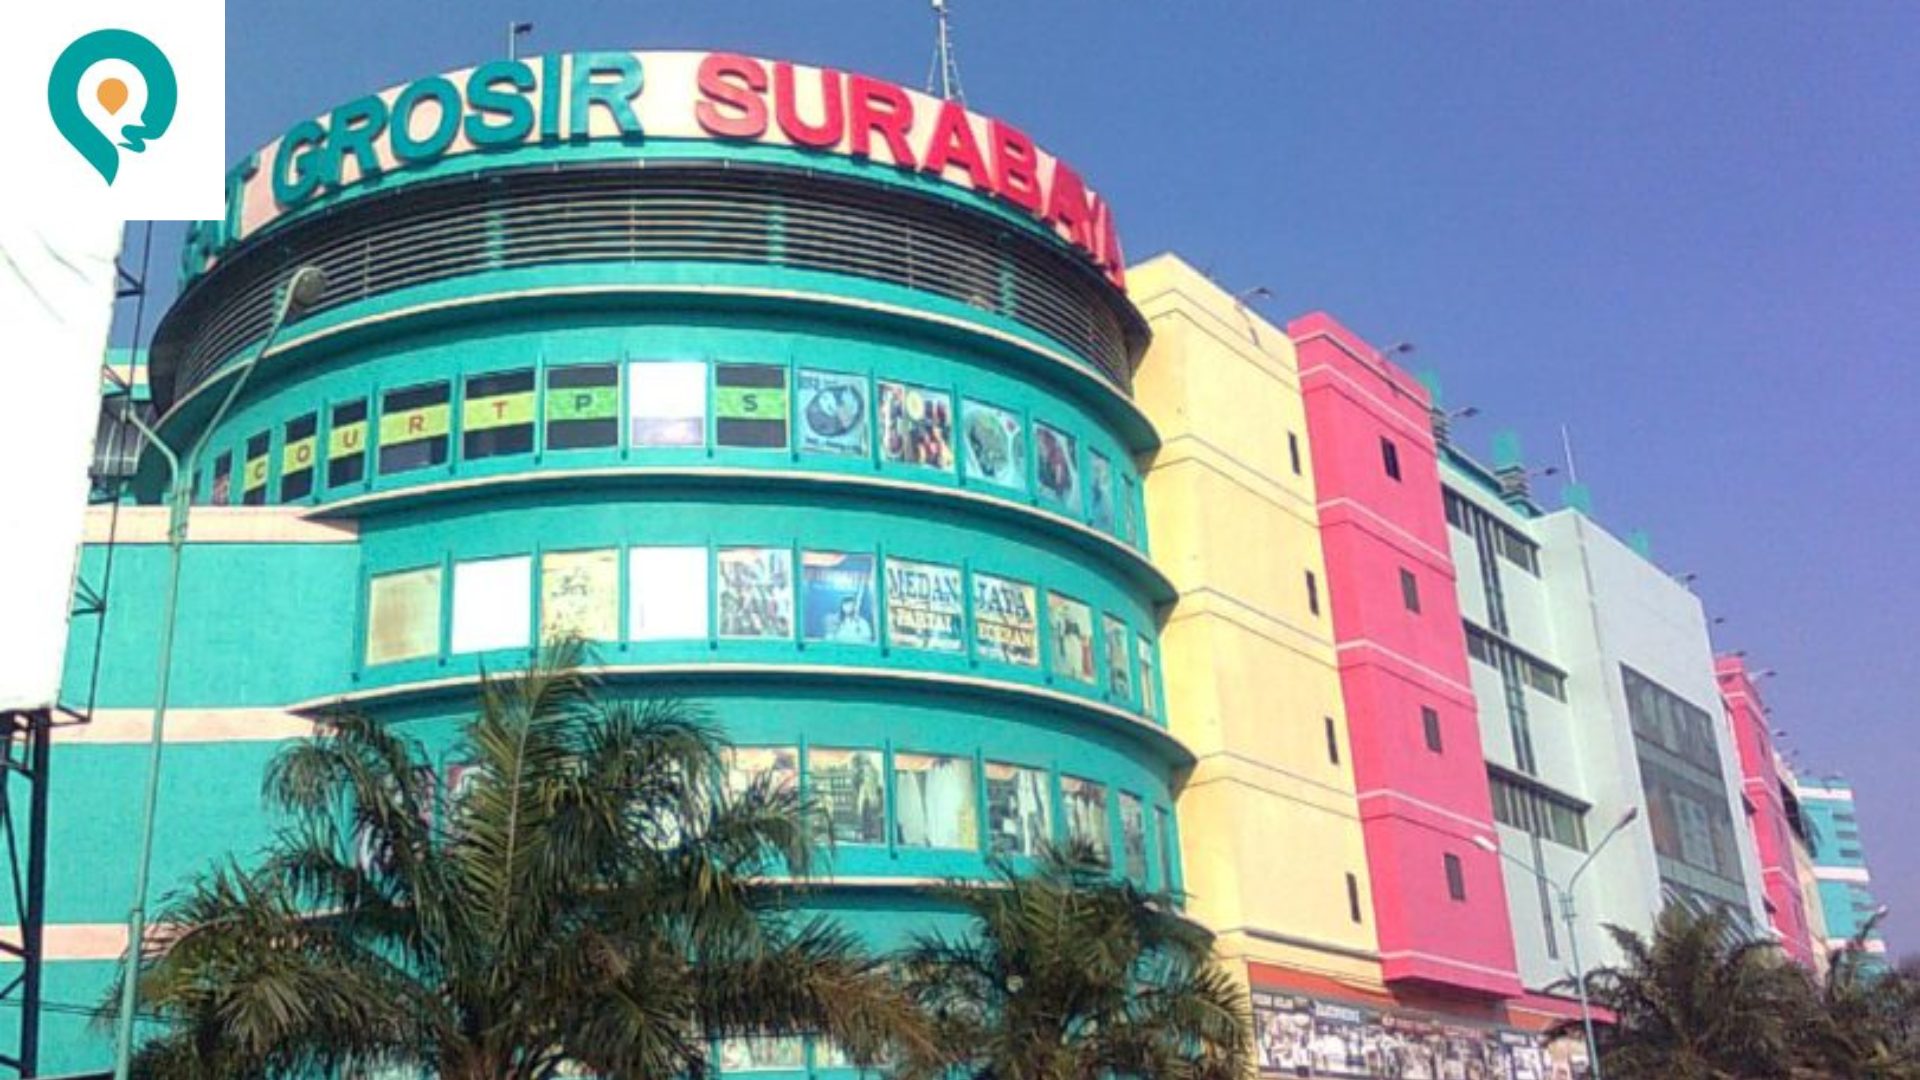 Pusat Grosir Surabaya